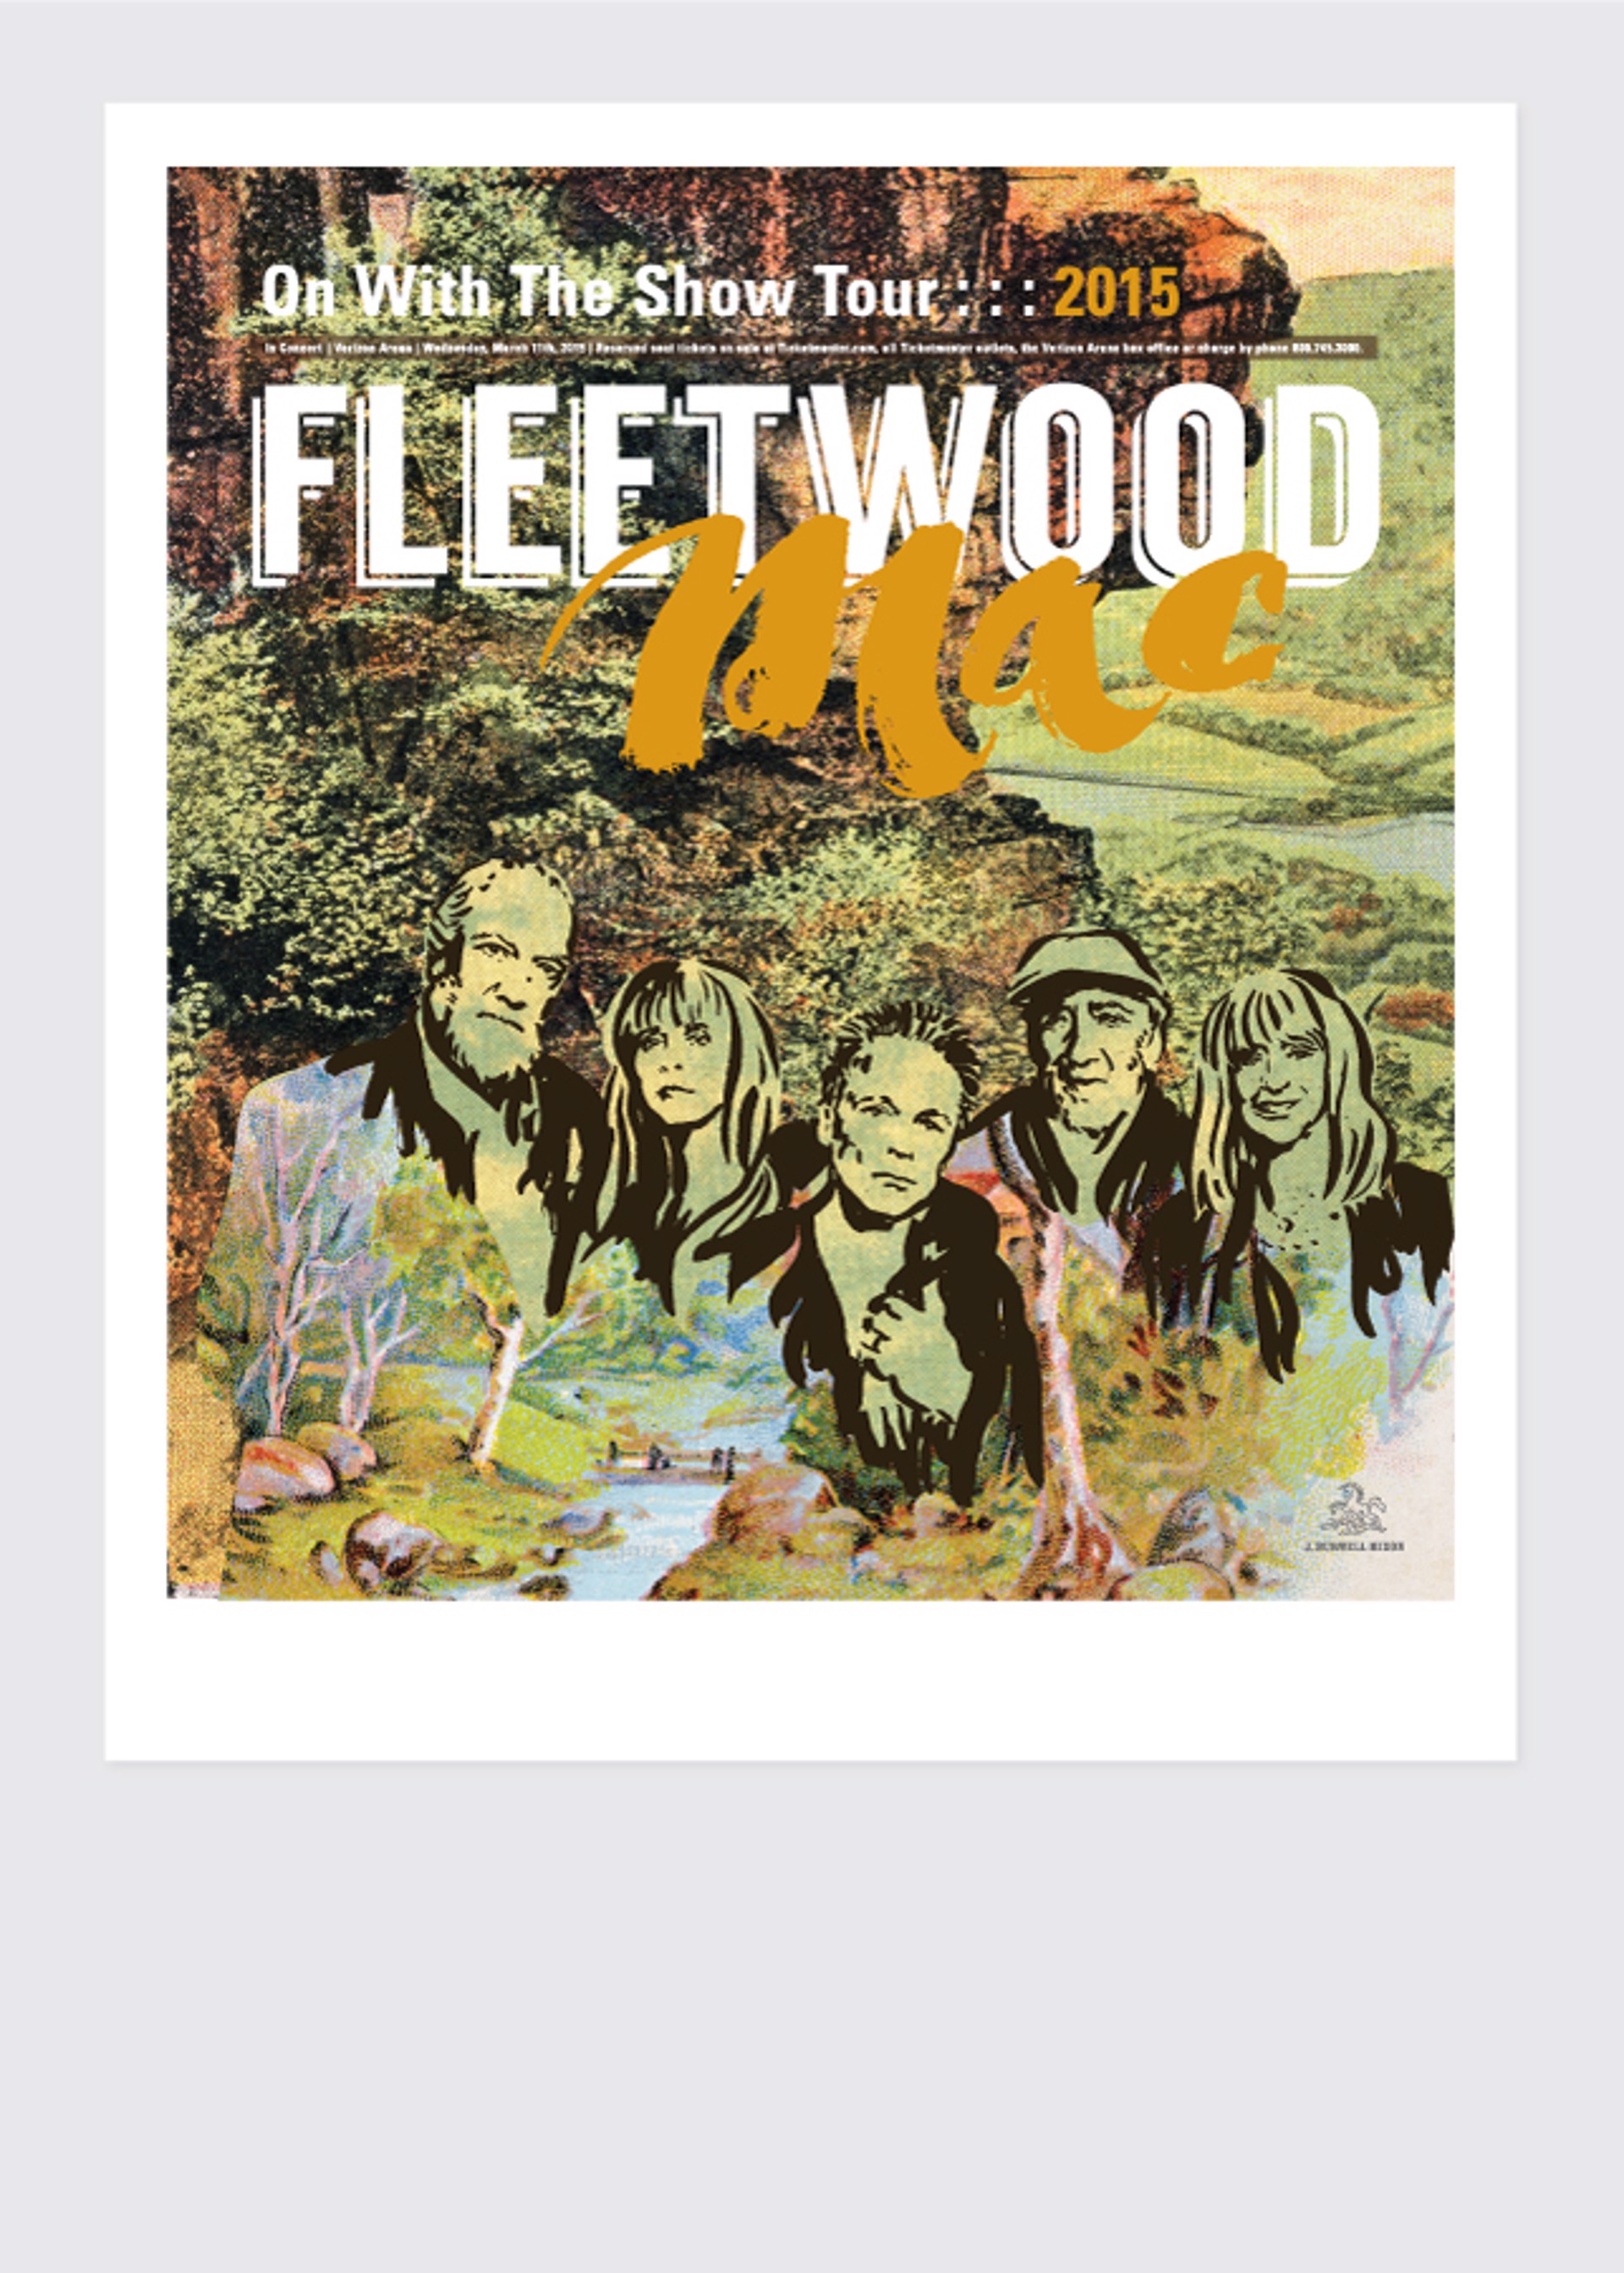 Fleetwood Mac Concert Poster by Jamie Burwell Mixon